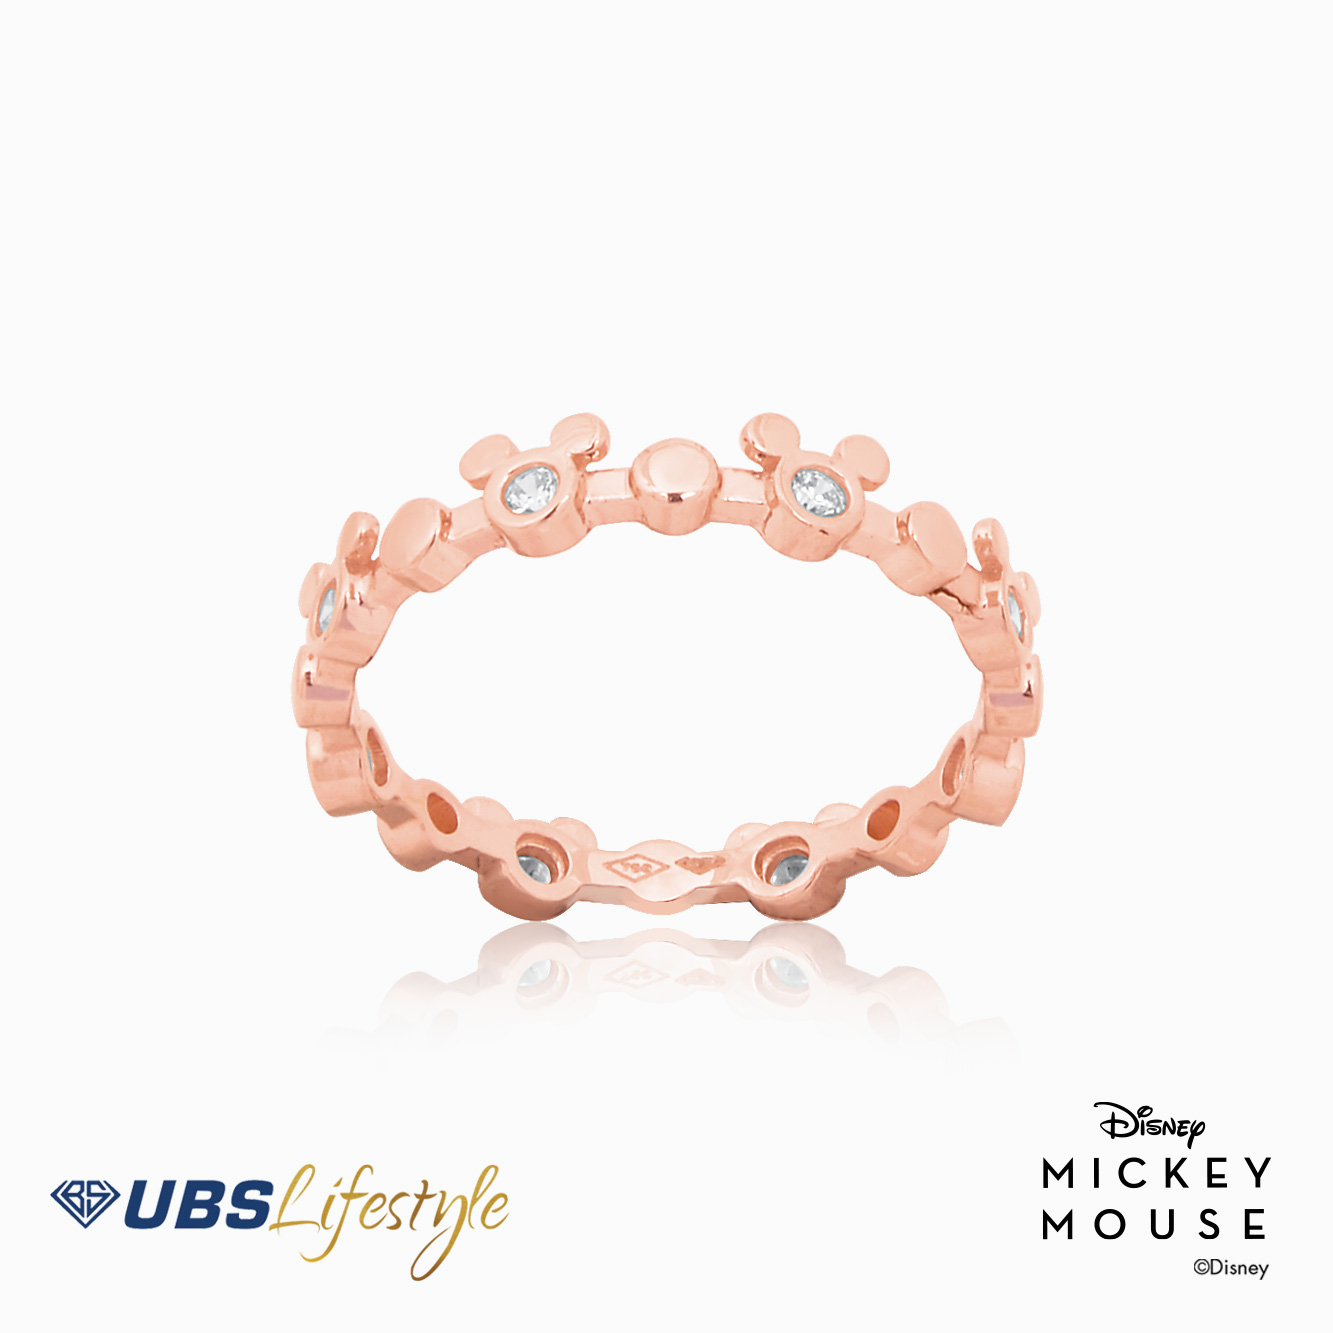 UBS Cincin Emas Disney Mickey  Mouse - Ccy0110 - 17K